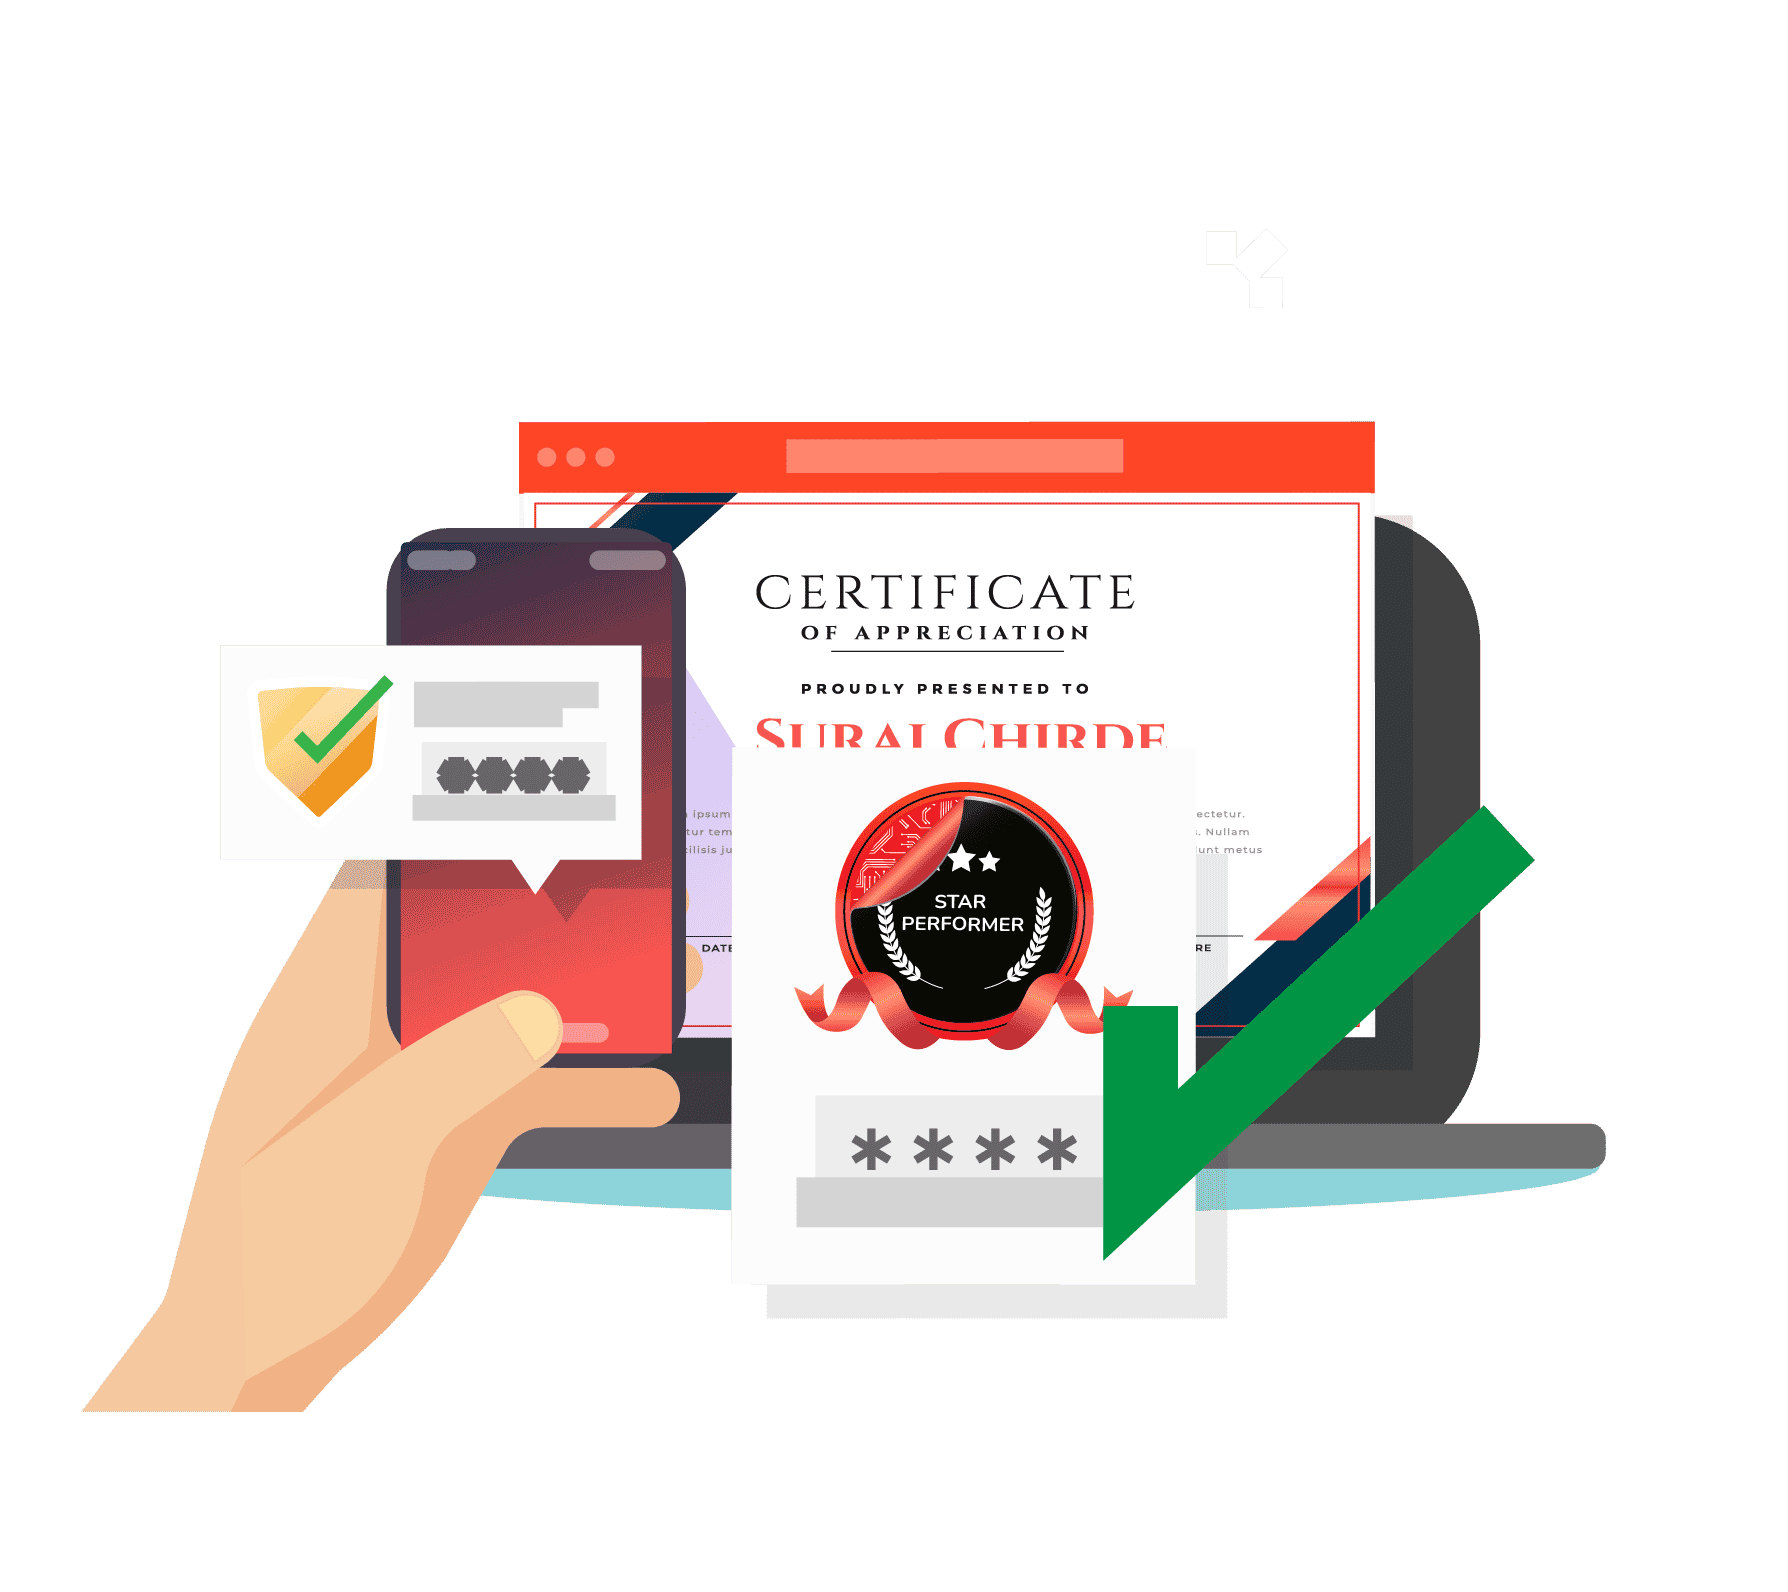 Verifiable digital certificate & badge in digital credentials platforms